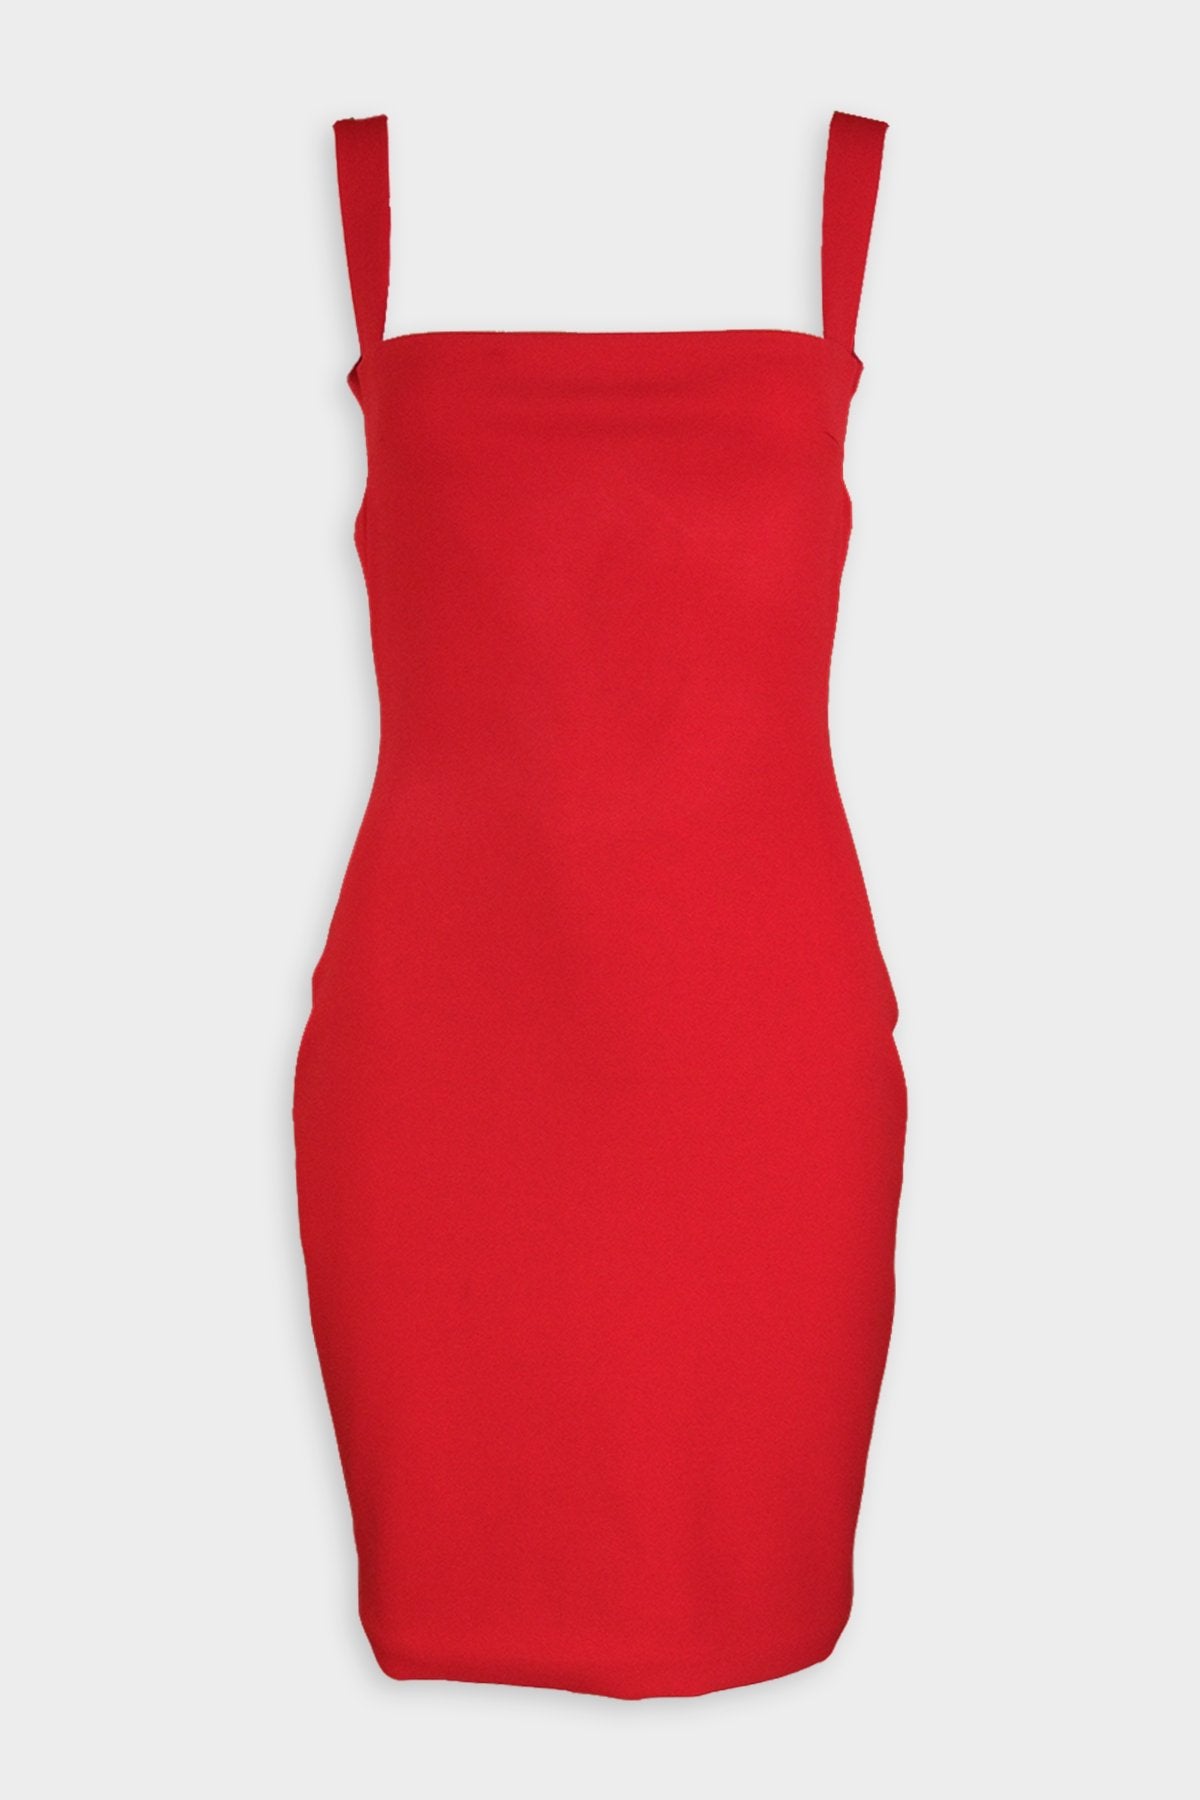 Kaia Mini Dress in Red - shop-olivia.com